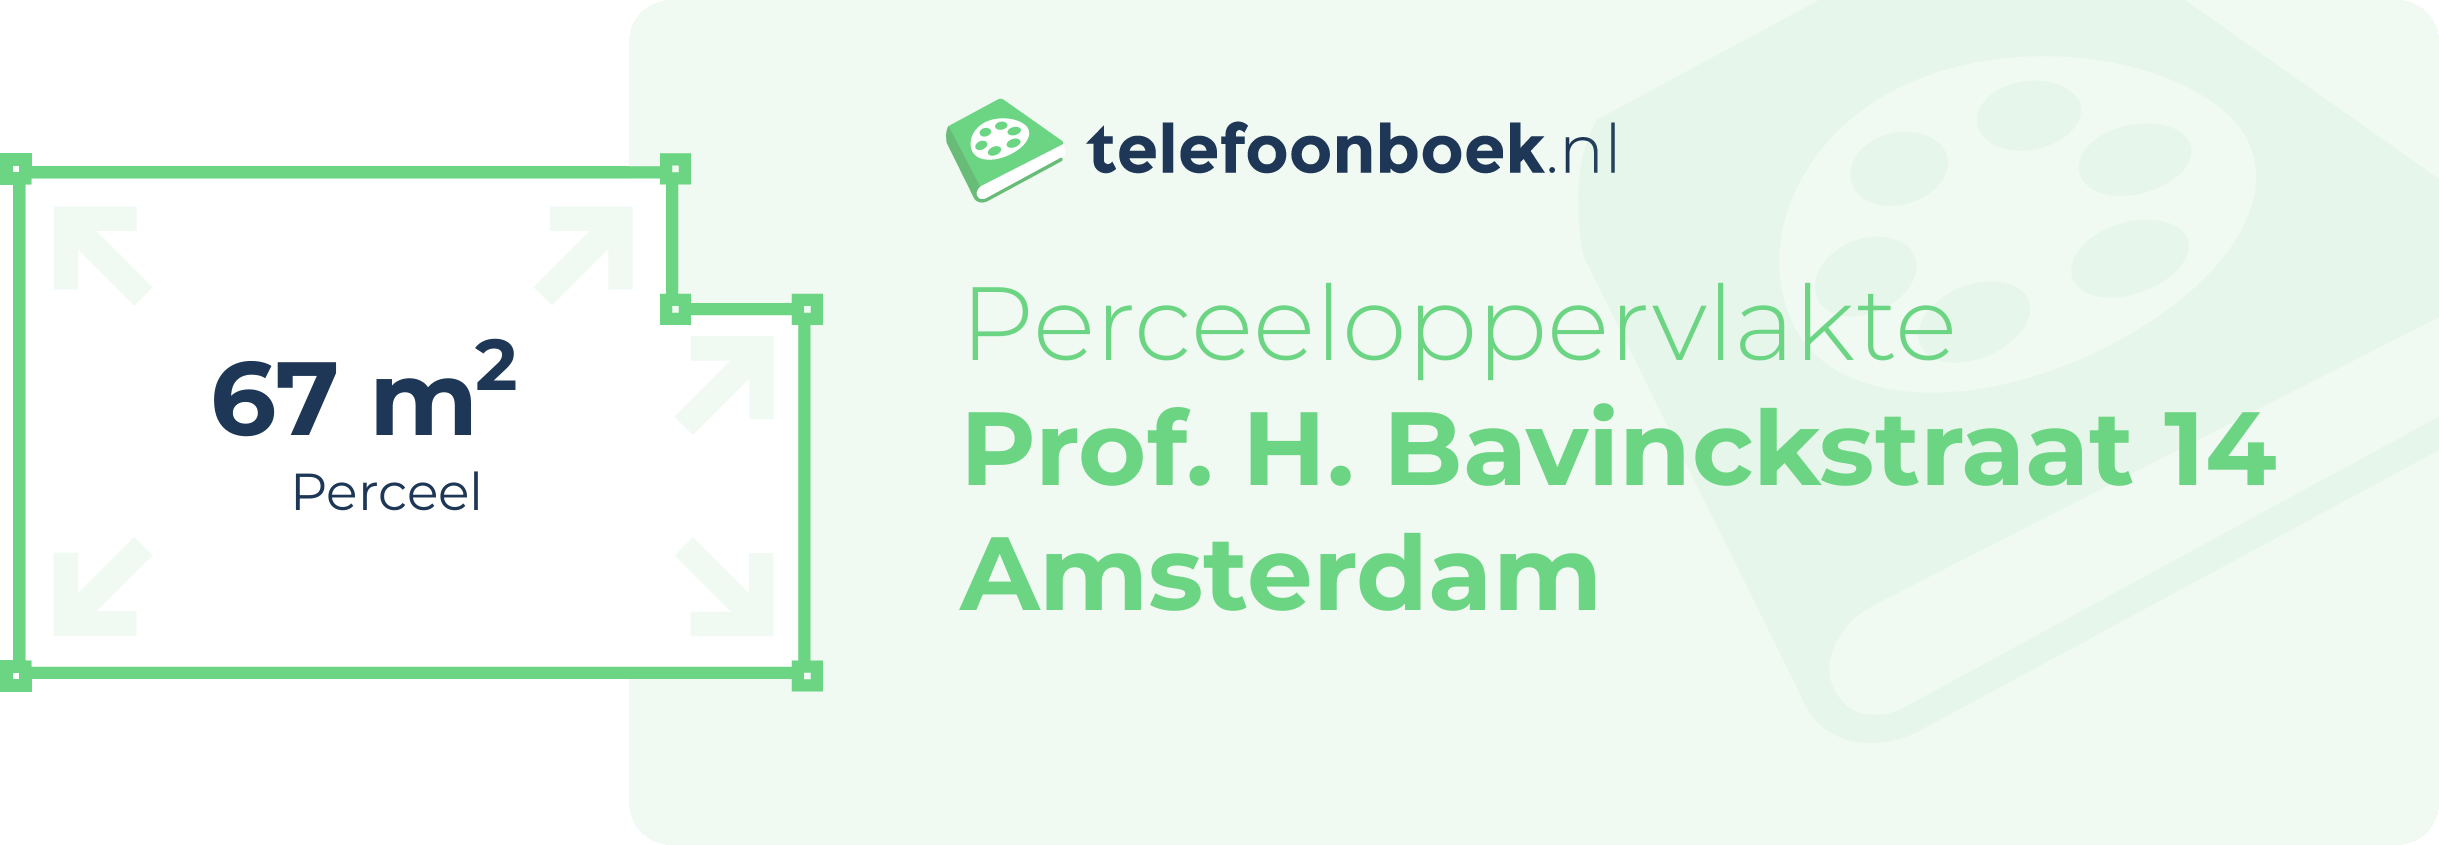 Perceeloppervlakte Prof. H. Bavinckstraat 14 Amsterdam